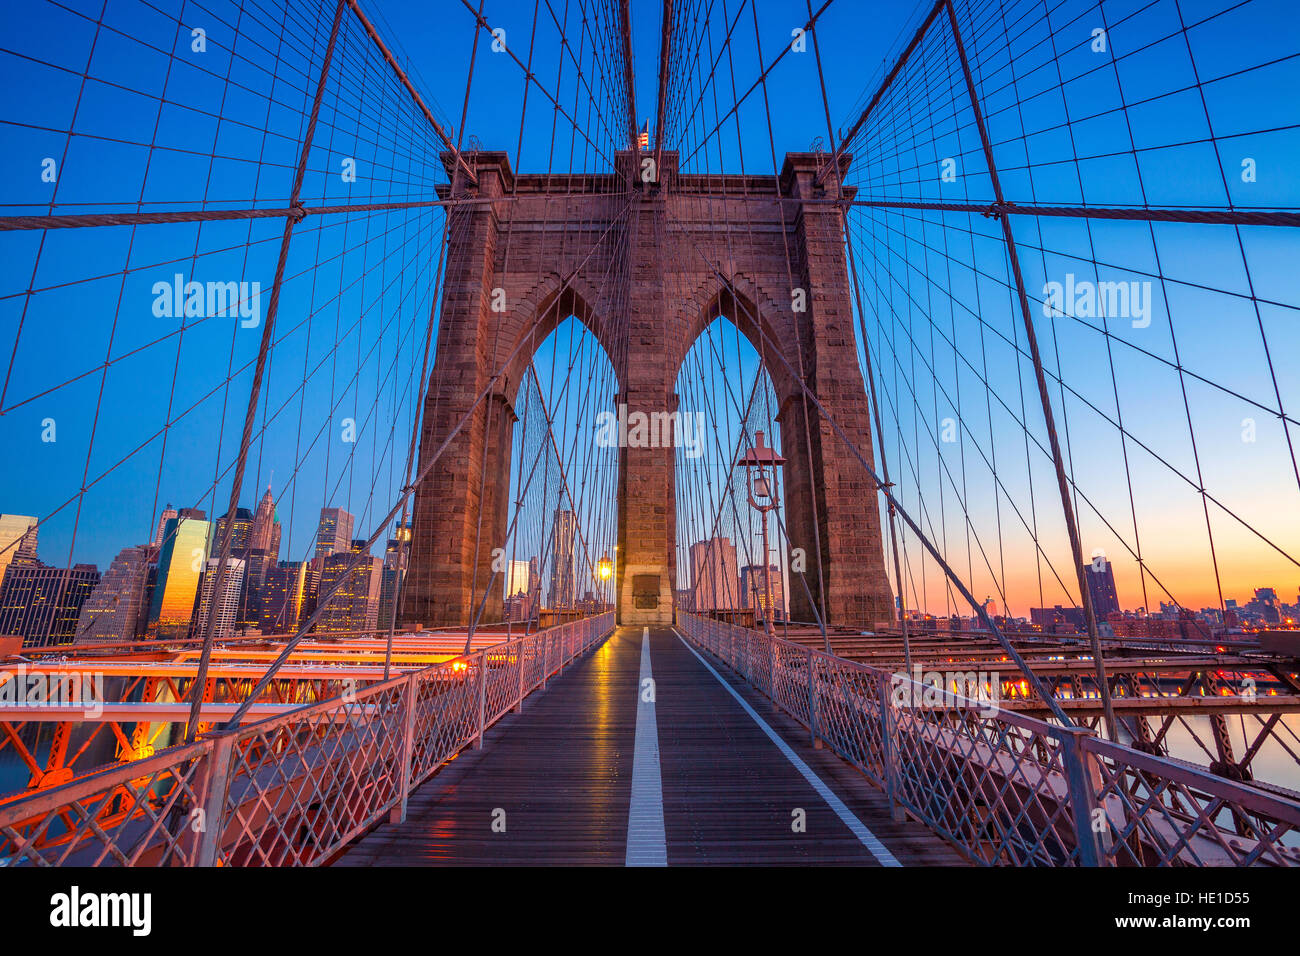 Brooklyn Bridge in New York City. Cityscape image of Brooklyn Bridge with Manhattan skyline in the background. Stock Photo